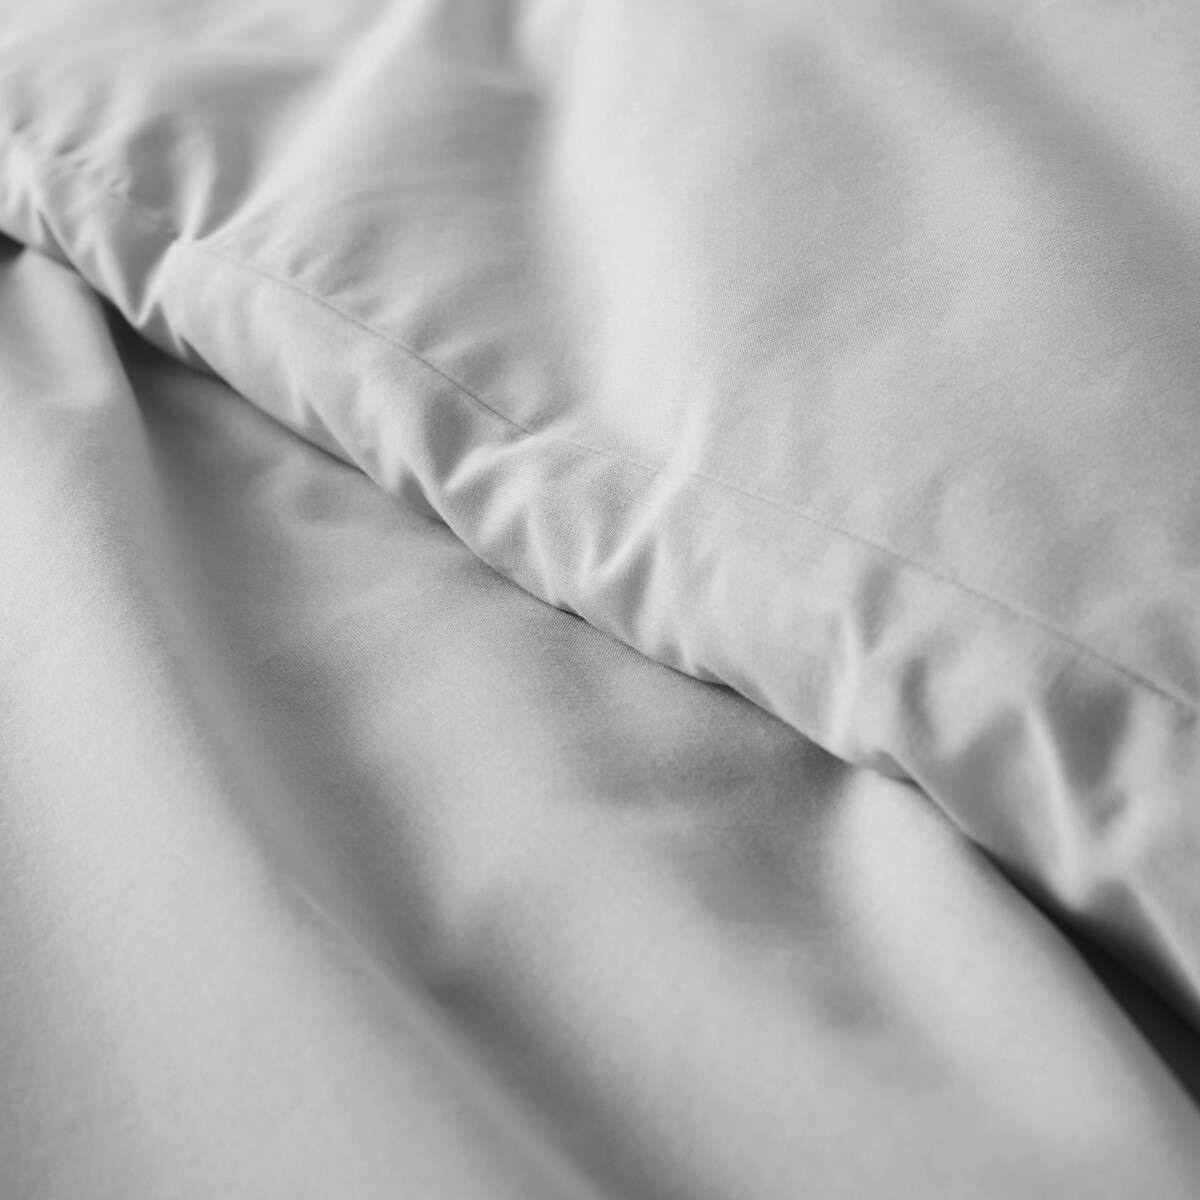  Mayfair Linen Relleno de almohada de 24 x 24 pulgadas, juego de  2 almohadas cuadradas ligeras alternativas de plumón, almohadas blancas para  cama, almohadas decorativas para sofá cama, almohadas firmes para